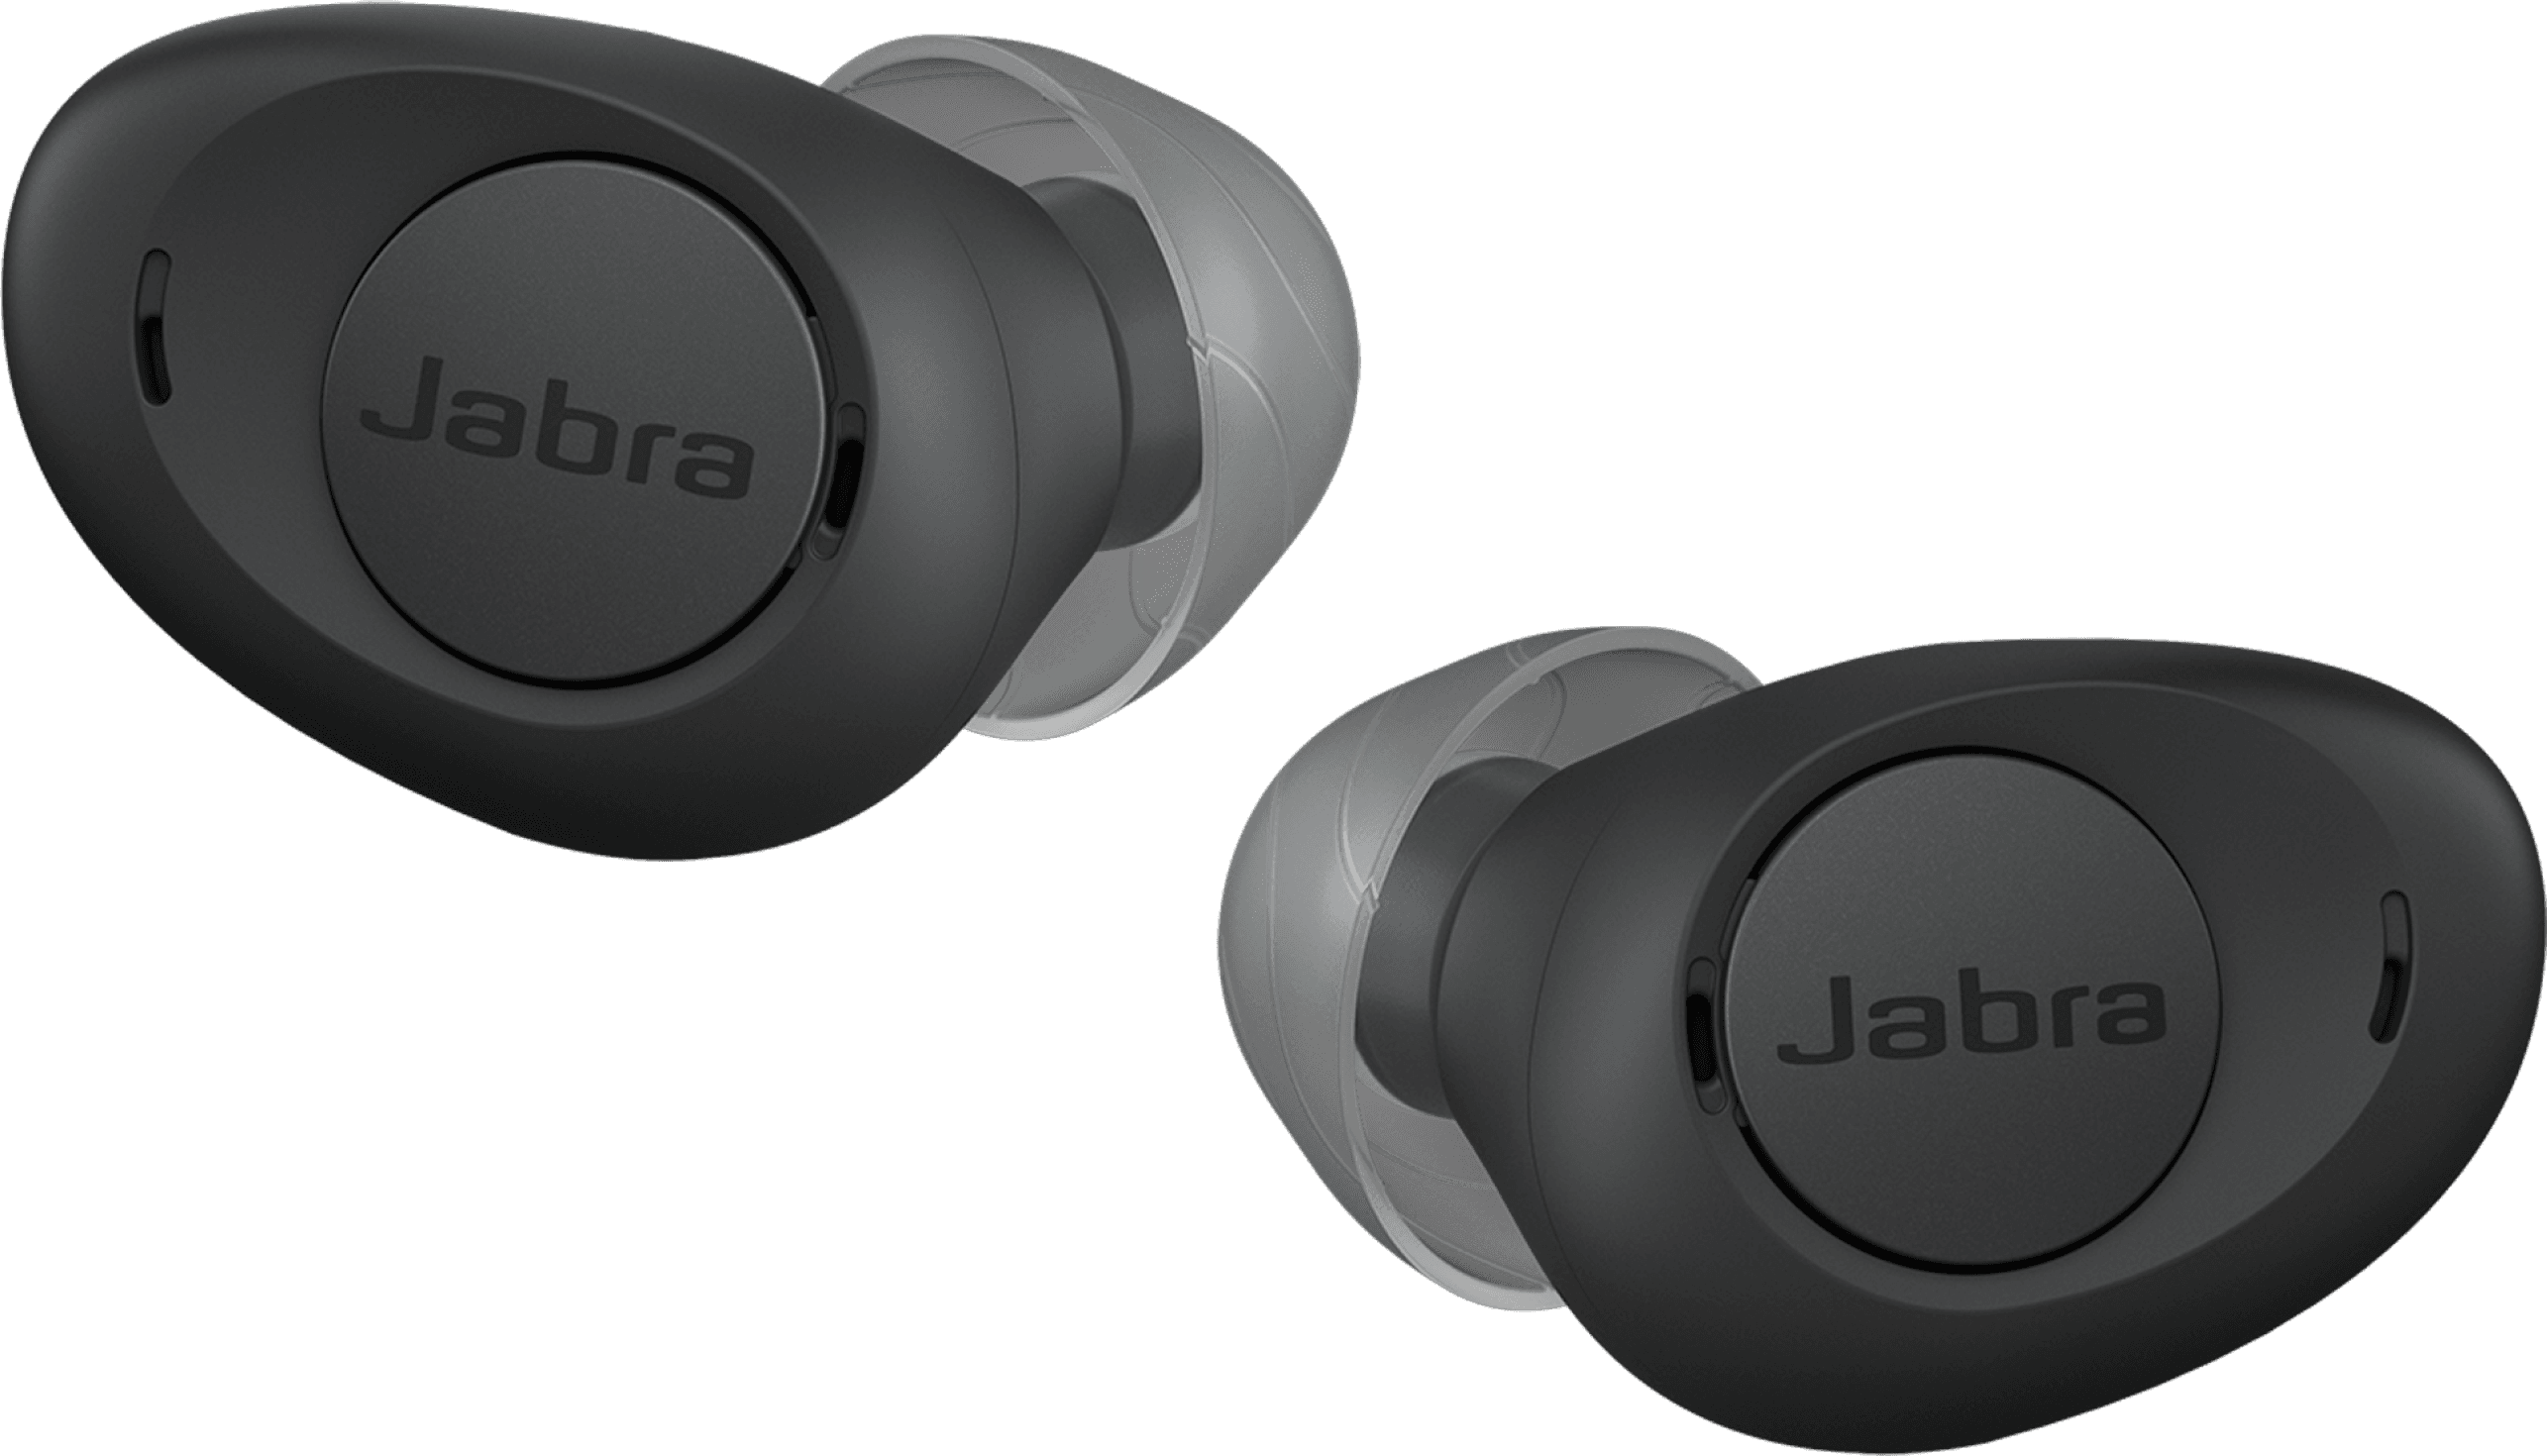 Jabra gray earbuds